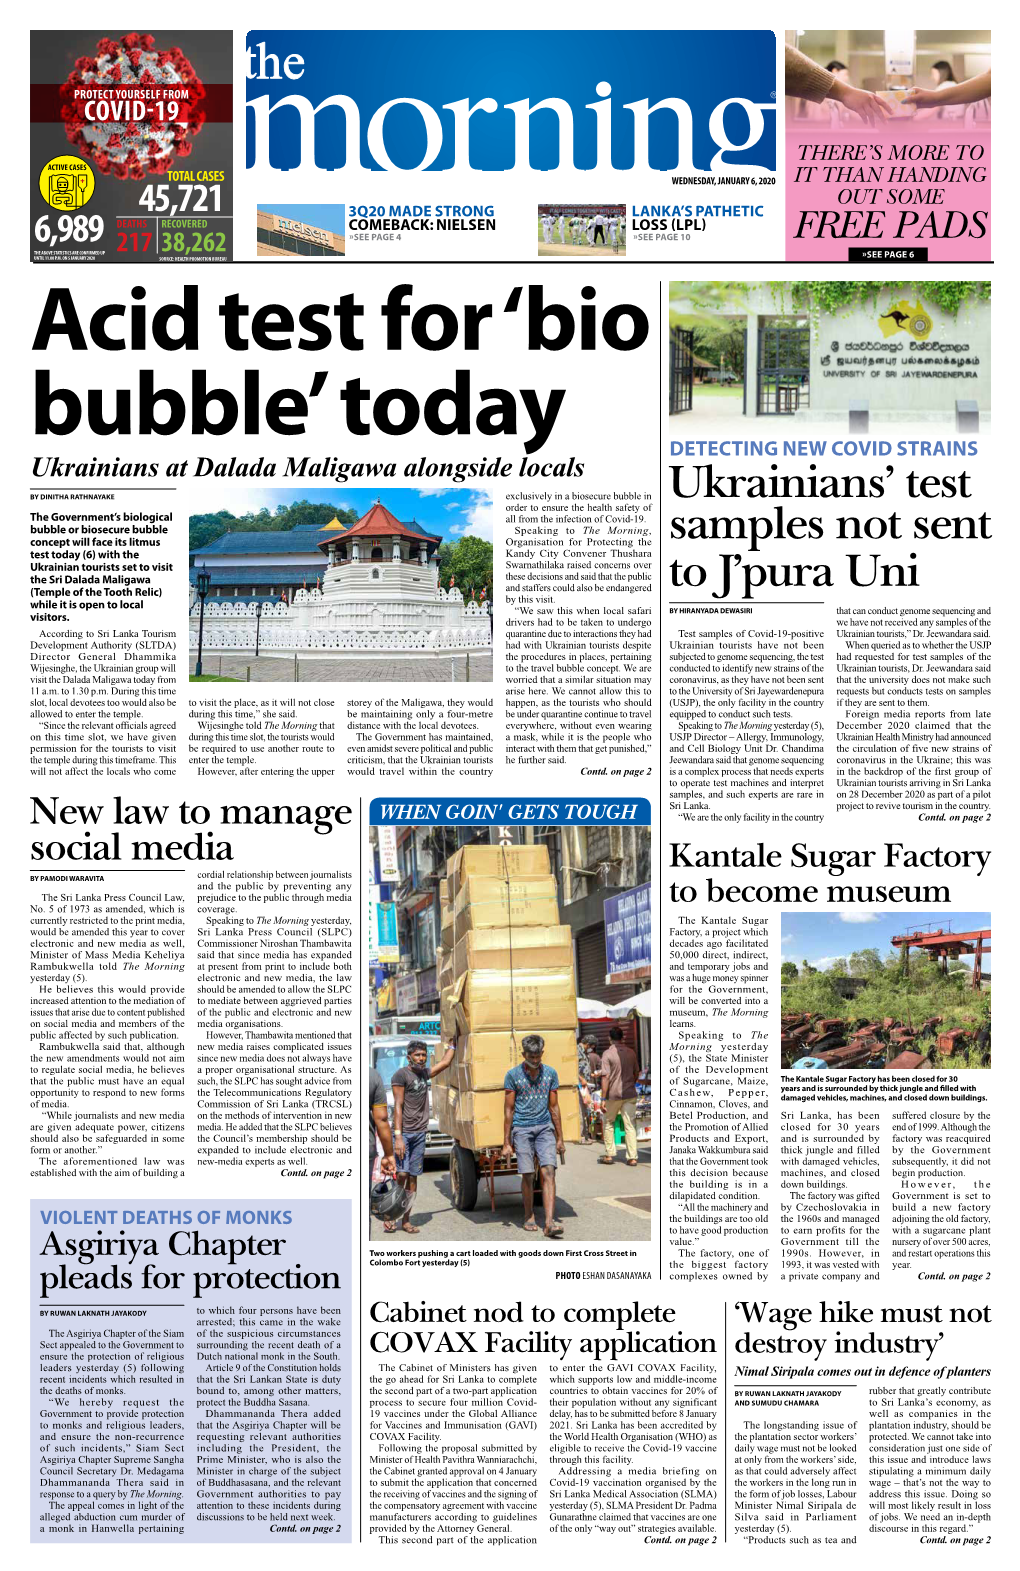 Ukrainians' Test Samples Not Sent to J'pura